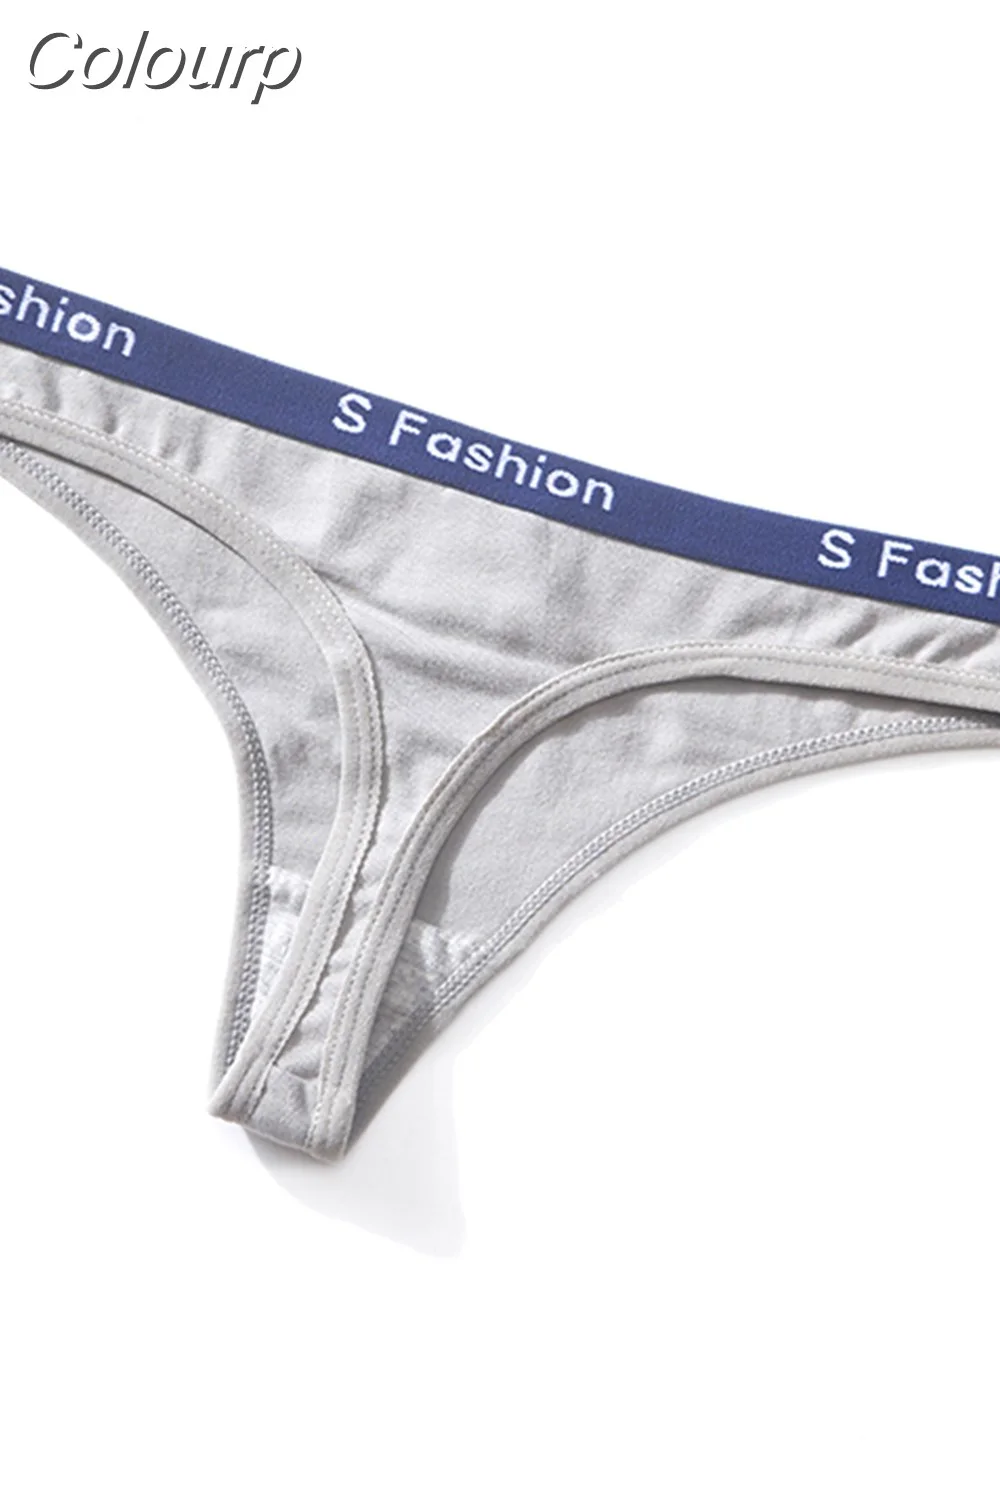 Colourp 1Pcs Cotton Panties For Woman G-String Lingerie Fashion Female Underwear Women's T-back Sports Fitness Intimates